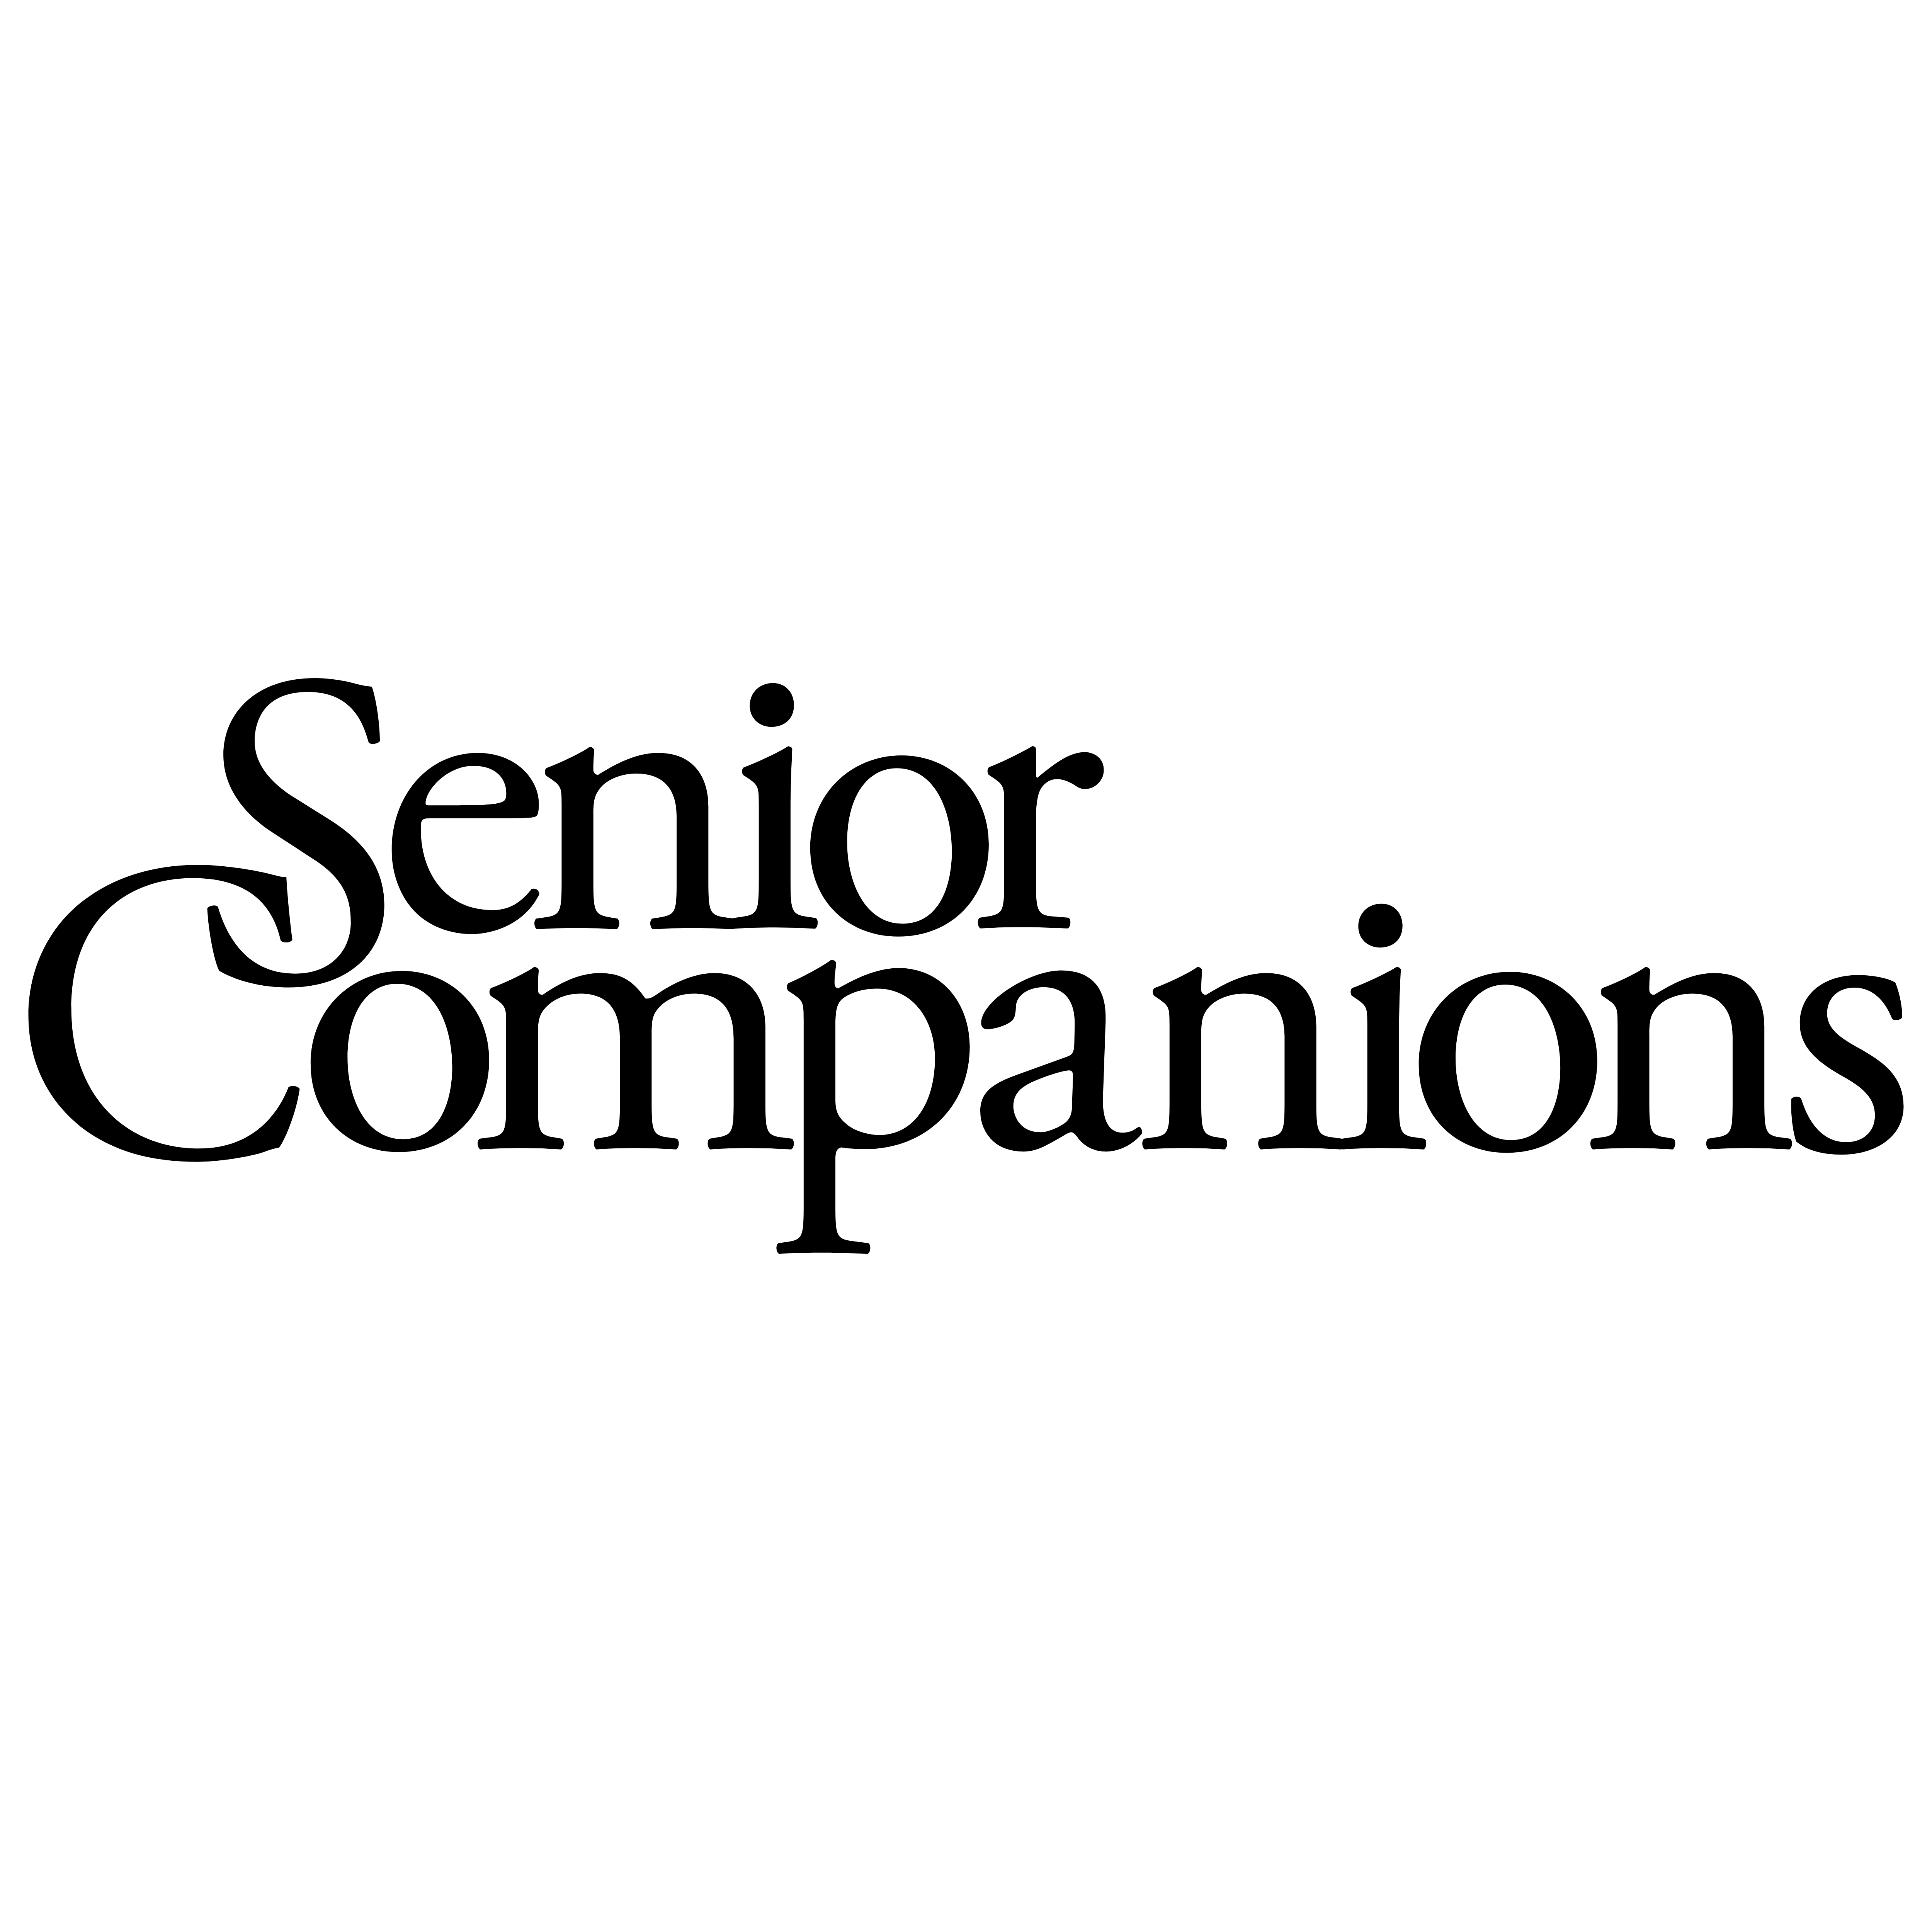 Senior Companions – Logos Download